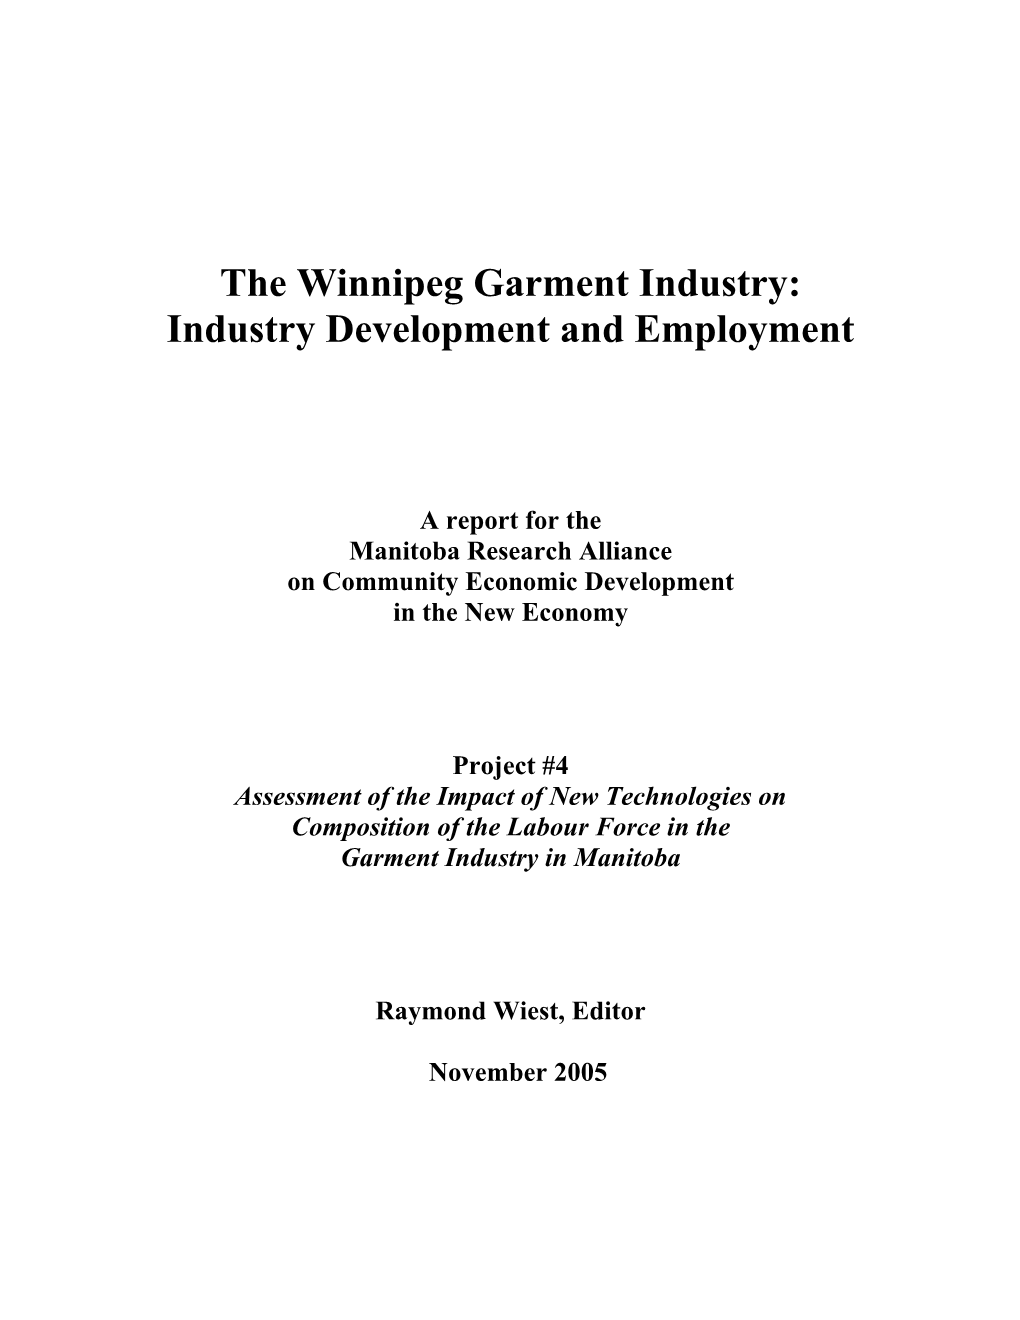 The Winnipeg Garment Industry: Industry Development and Employment